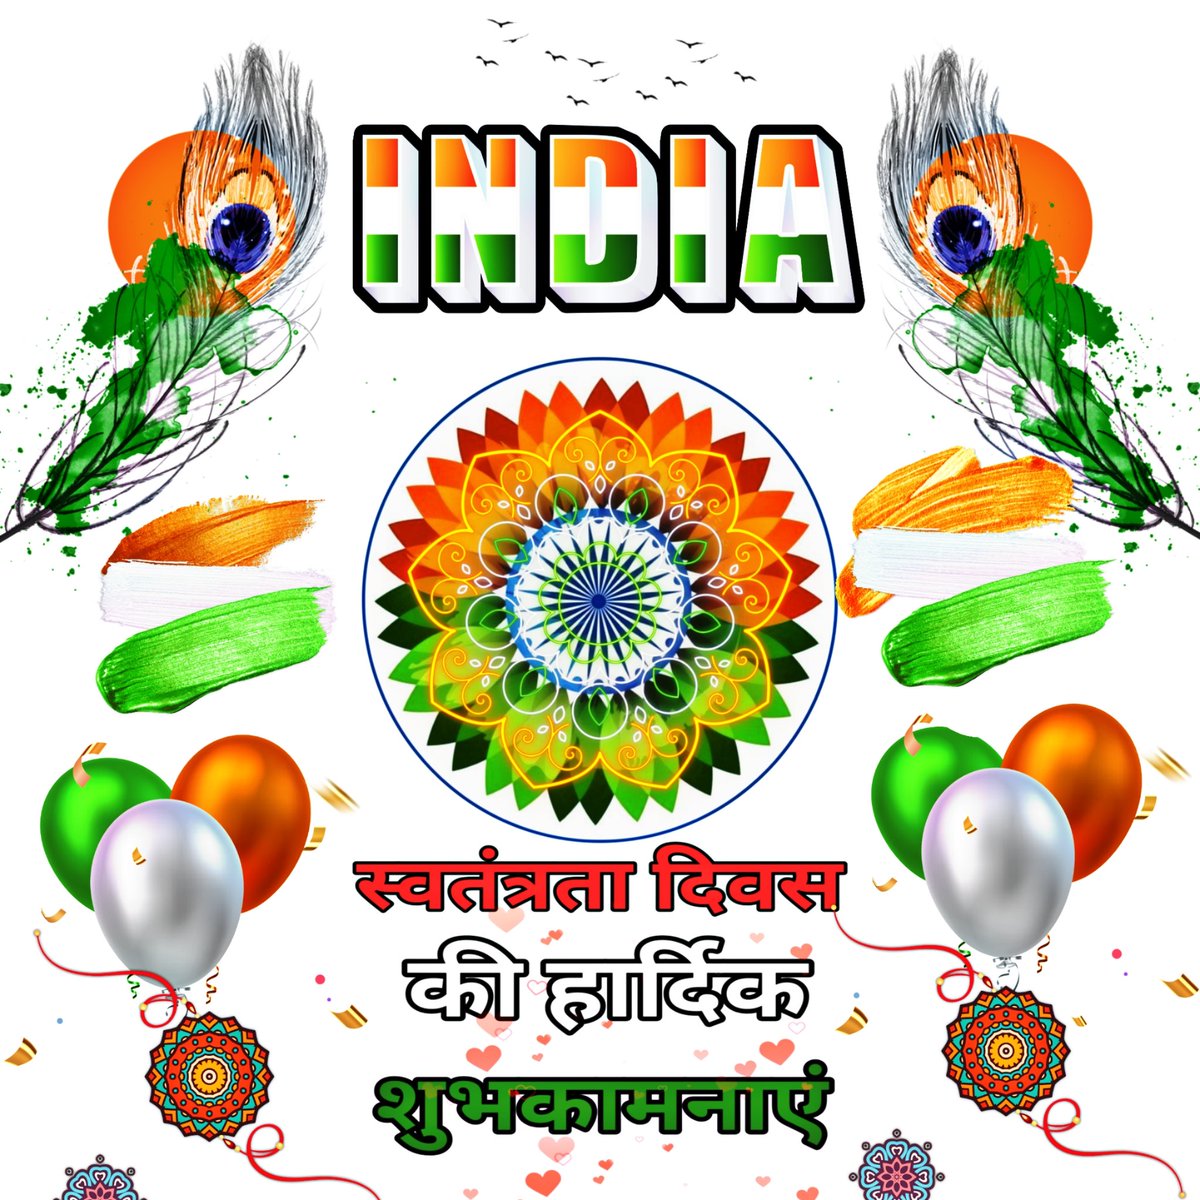 🇮🇳🇮🇳🇮🇳🇮🇳🇮🇳🇮🇳🇮🇳🇮🇳🇮🇳
#IndependenceDayIndia
#IndiaIndependenceDay
#JayHind #स्वतंत्रतादिवस
#mycreativity #artistic